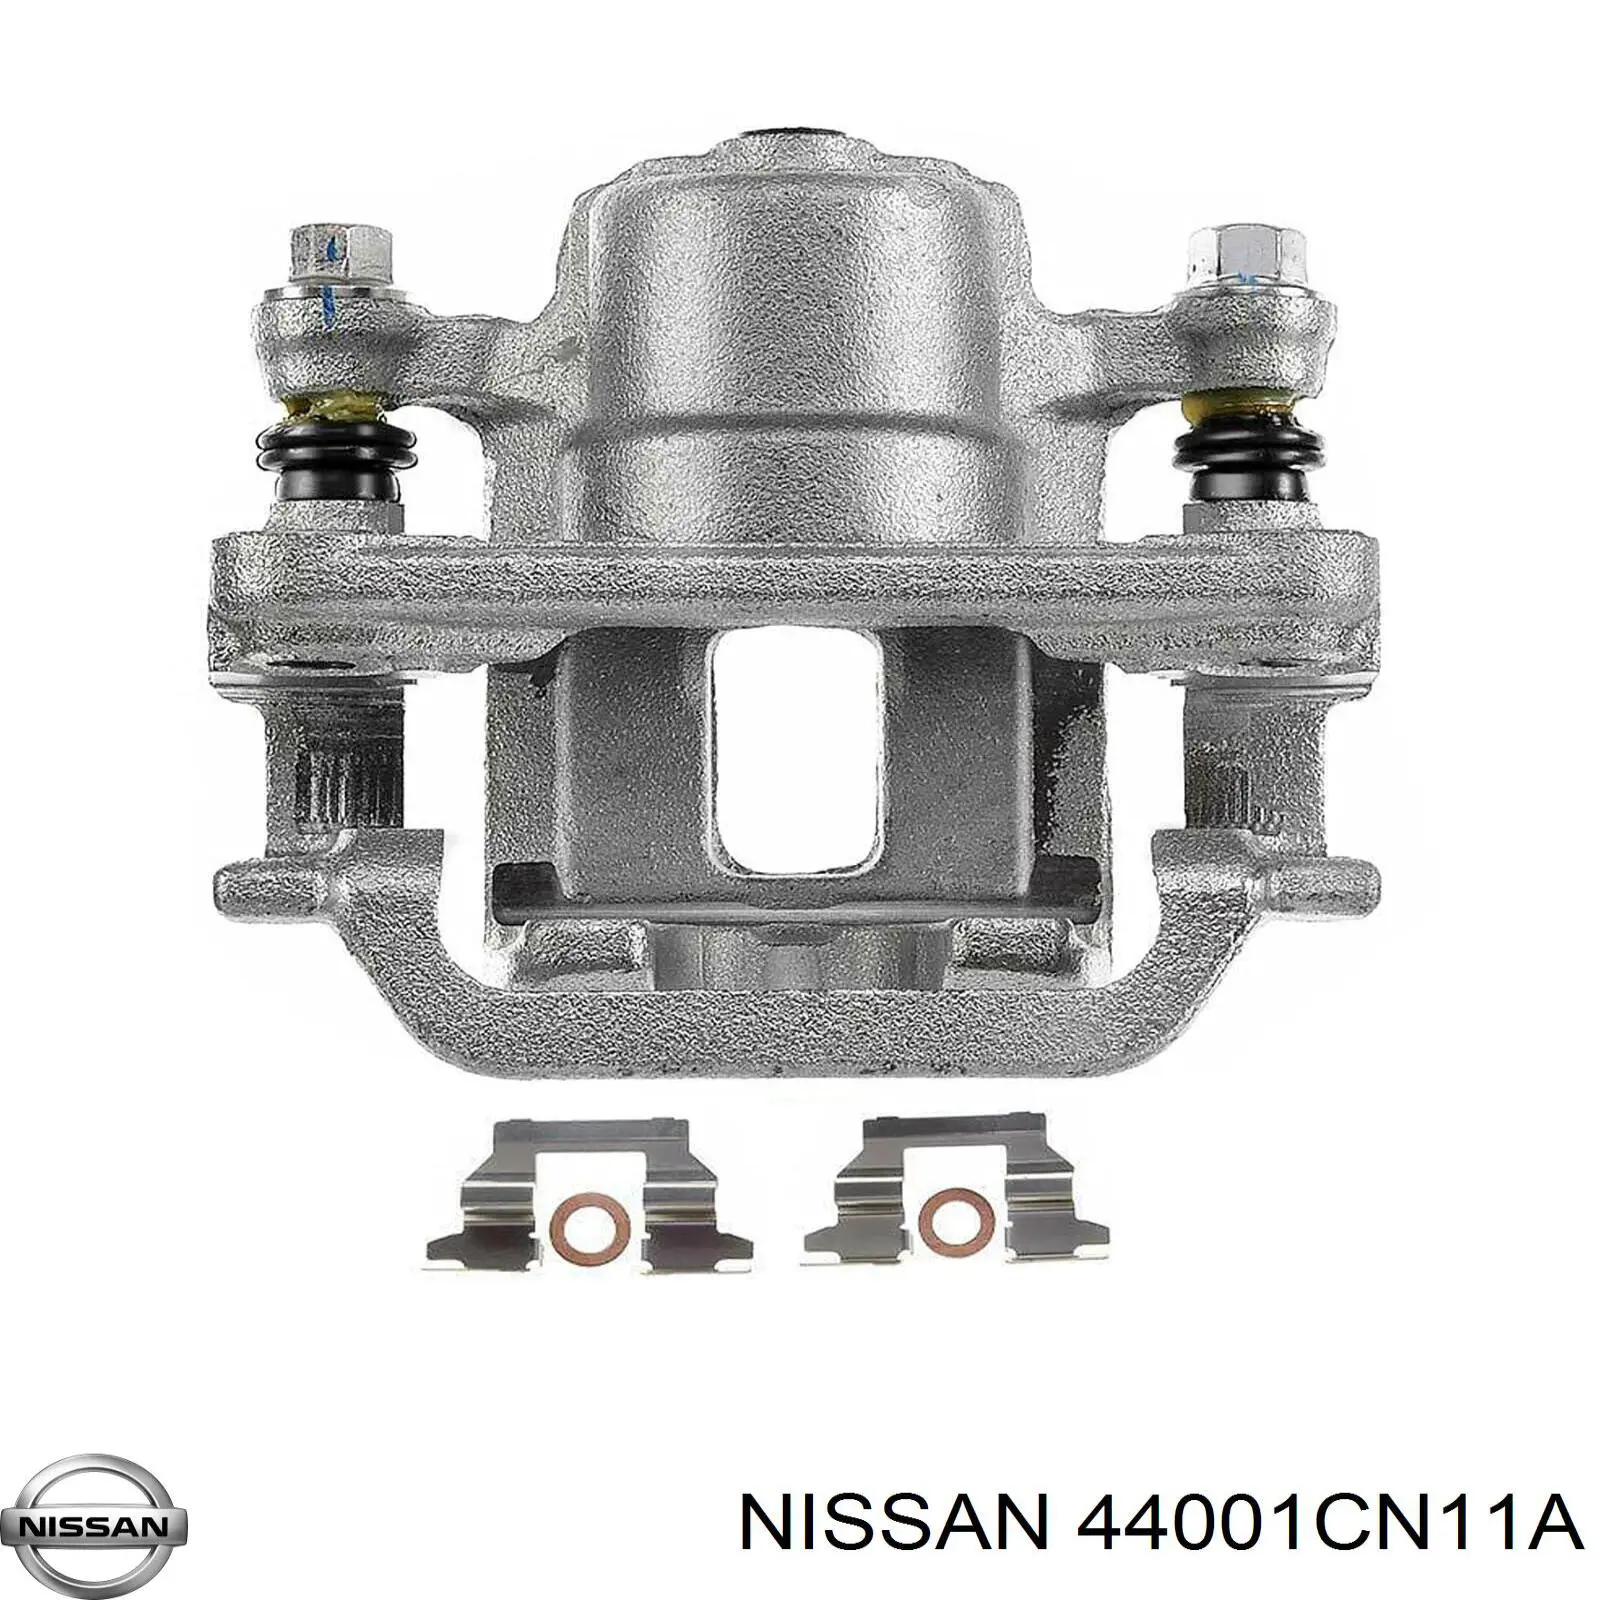 Суппорт тормозной задний правый Nissan 44001CN11A